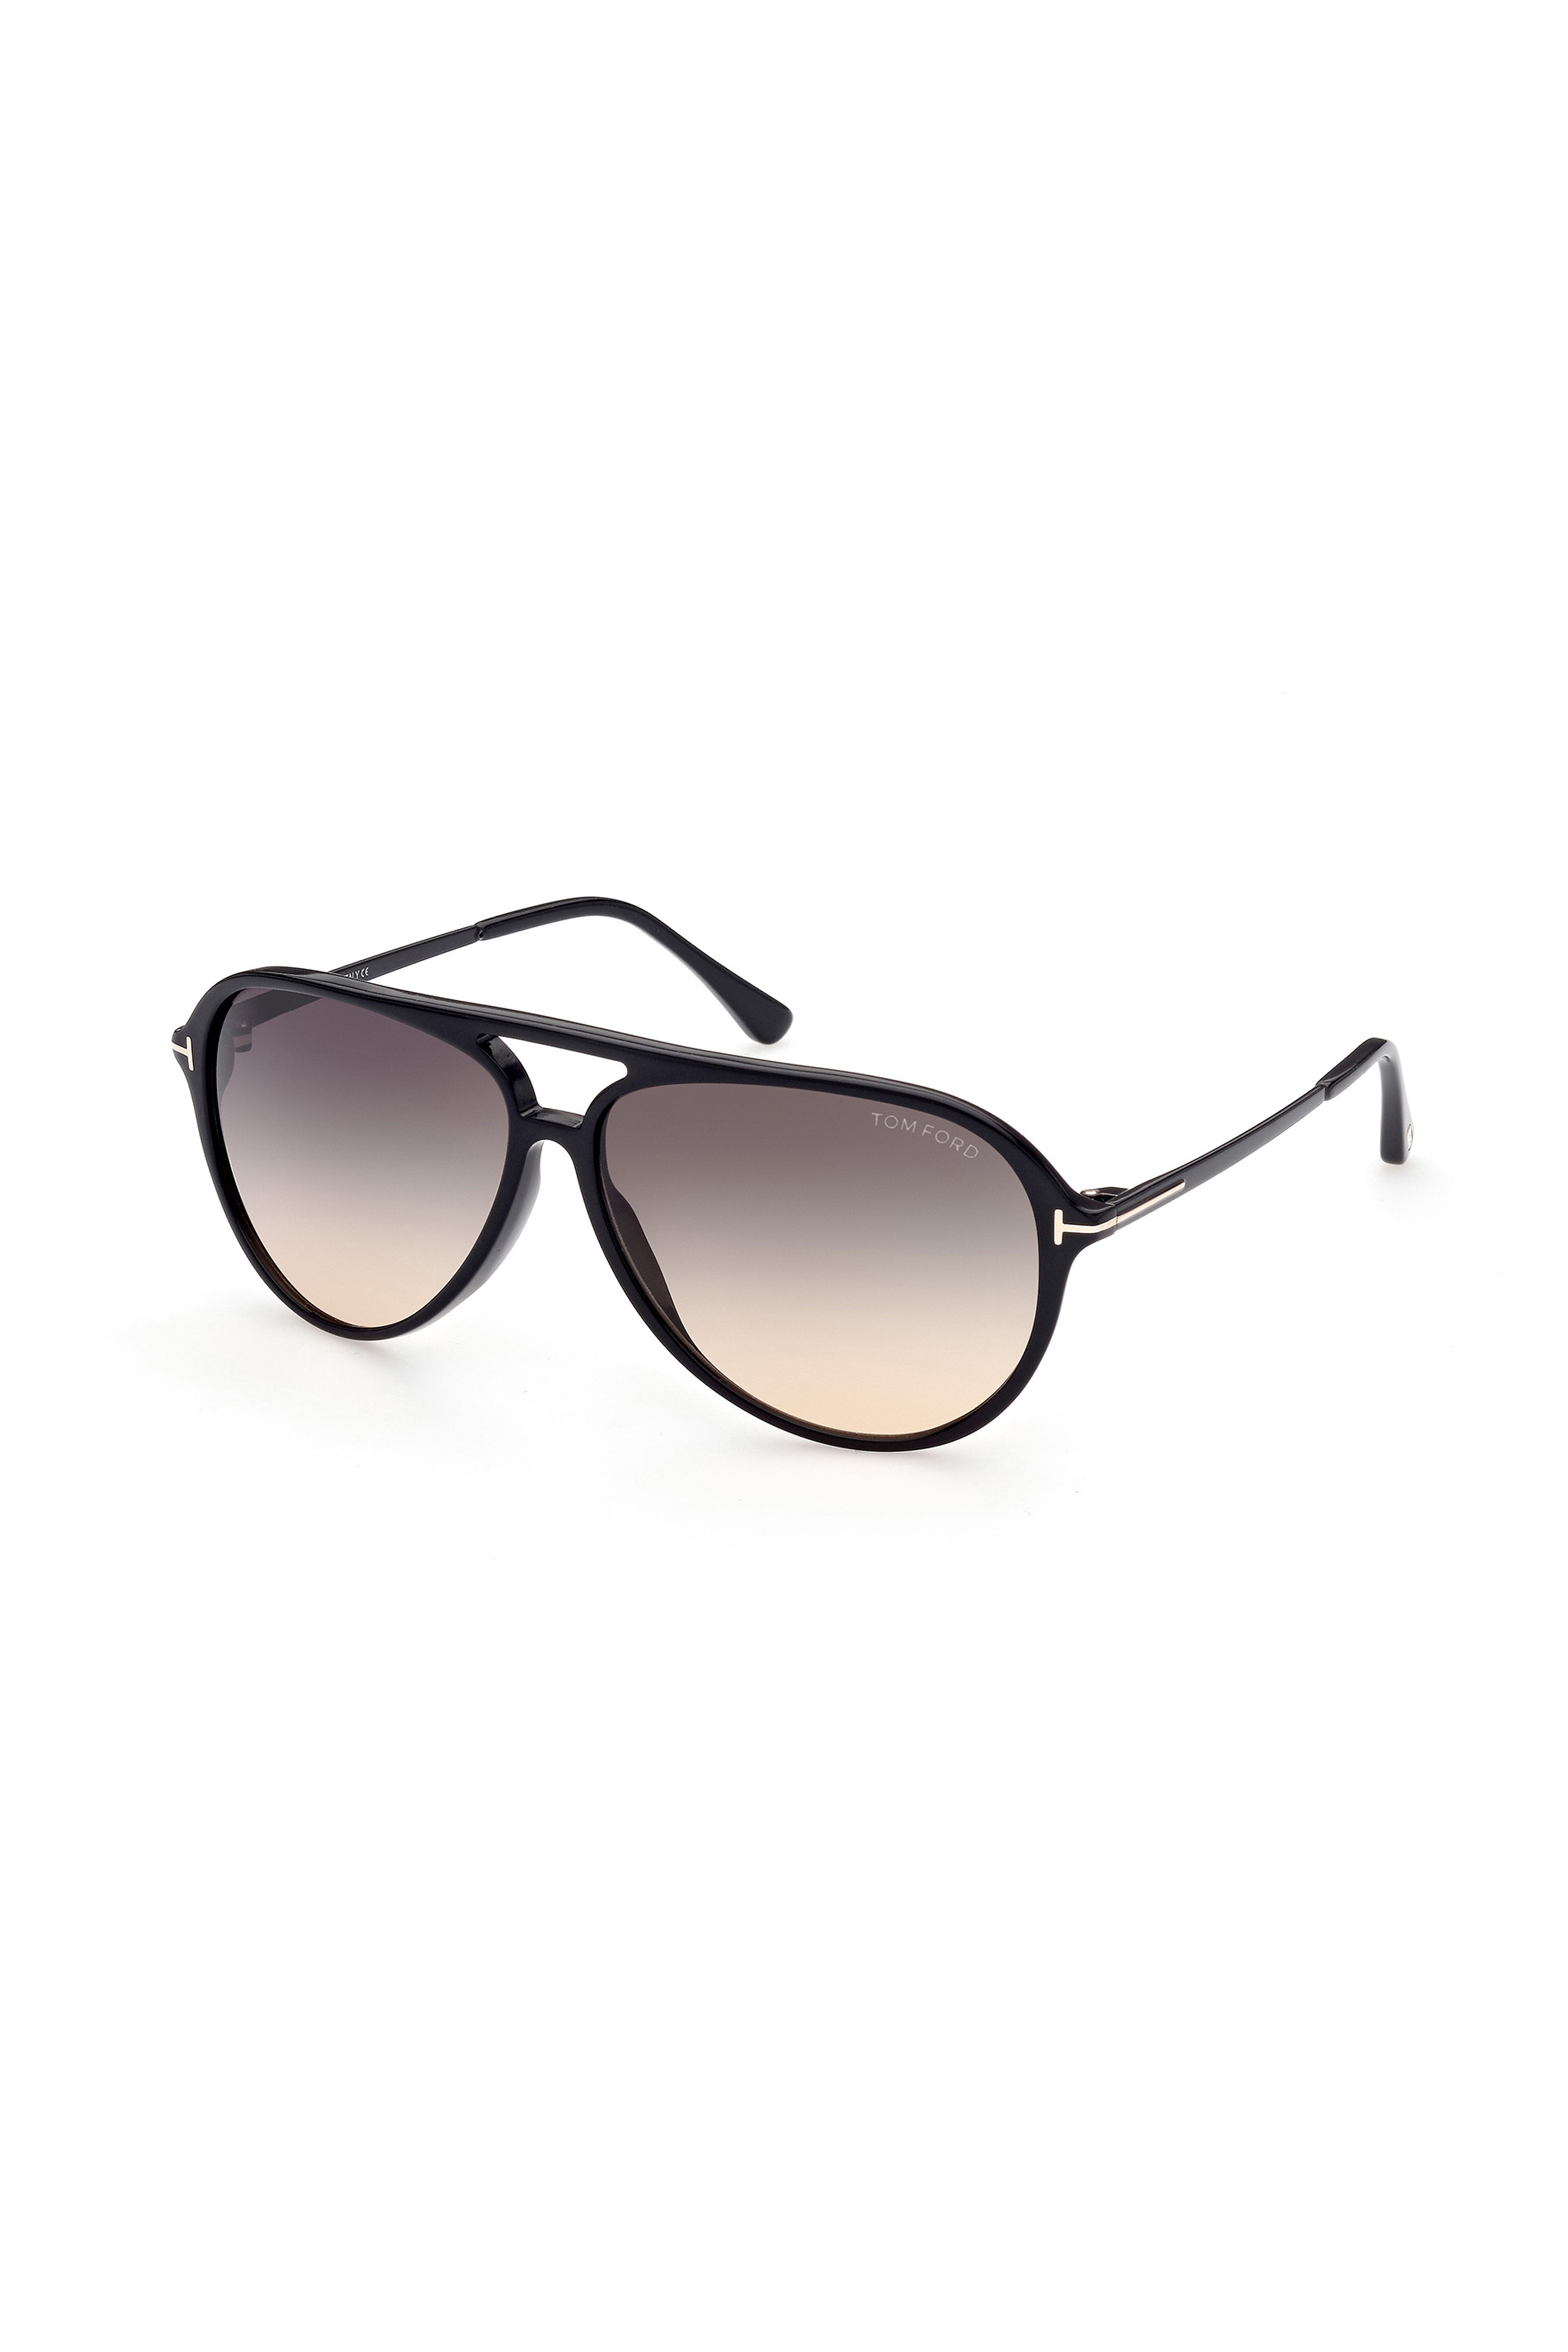 Tom Ford Eyewear - Black Aviator Sunglasses | Mitchell Stores